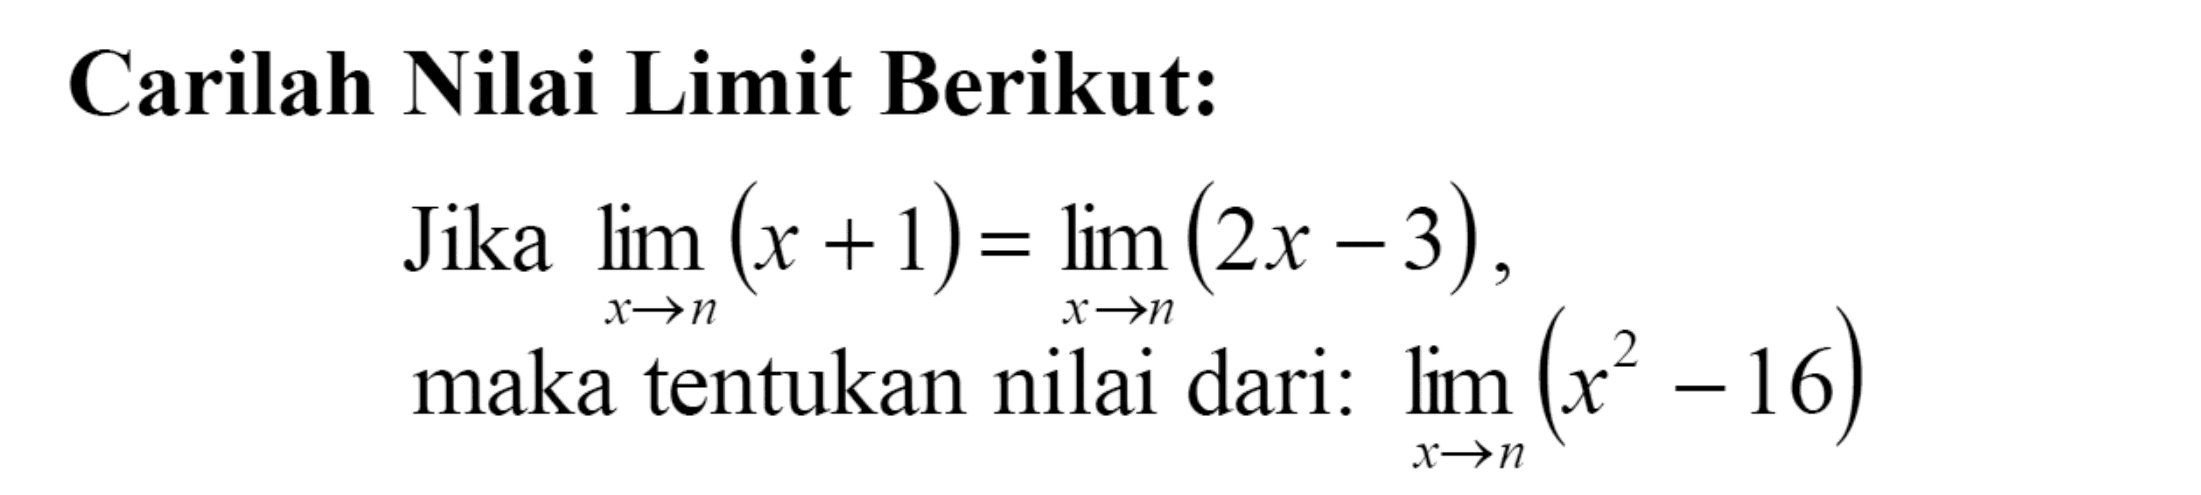 Carilah Nilai Limit Berikut: Jika limit x->n (x+1)=limit x->pi (2x-3), maka tentukan nilai dari: limit x->n (x^2-16)  